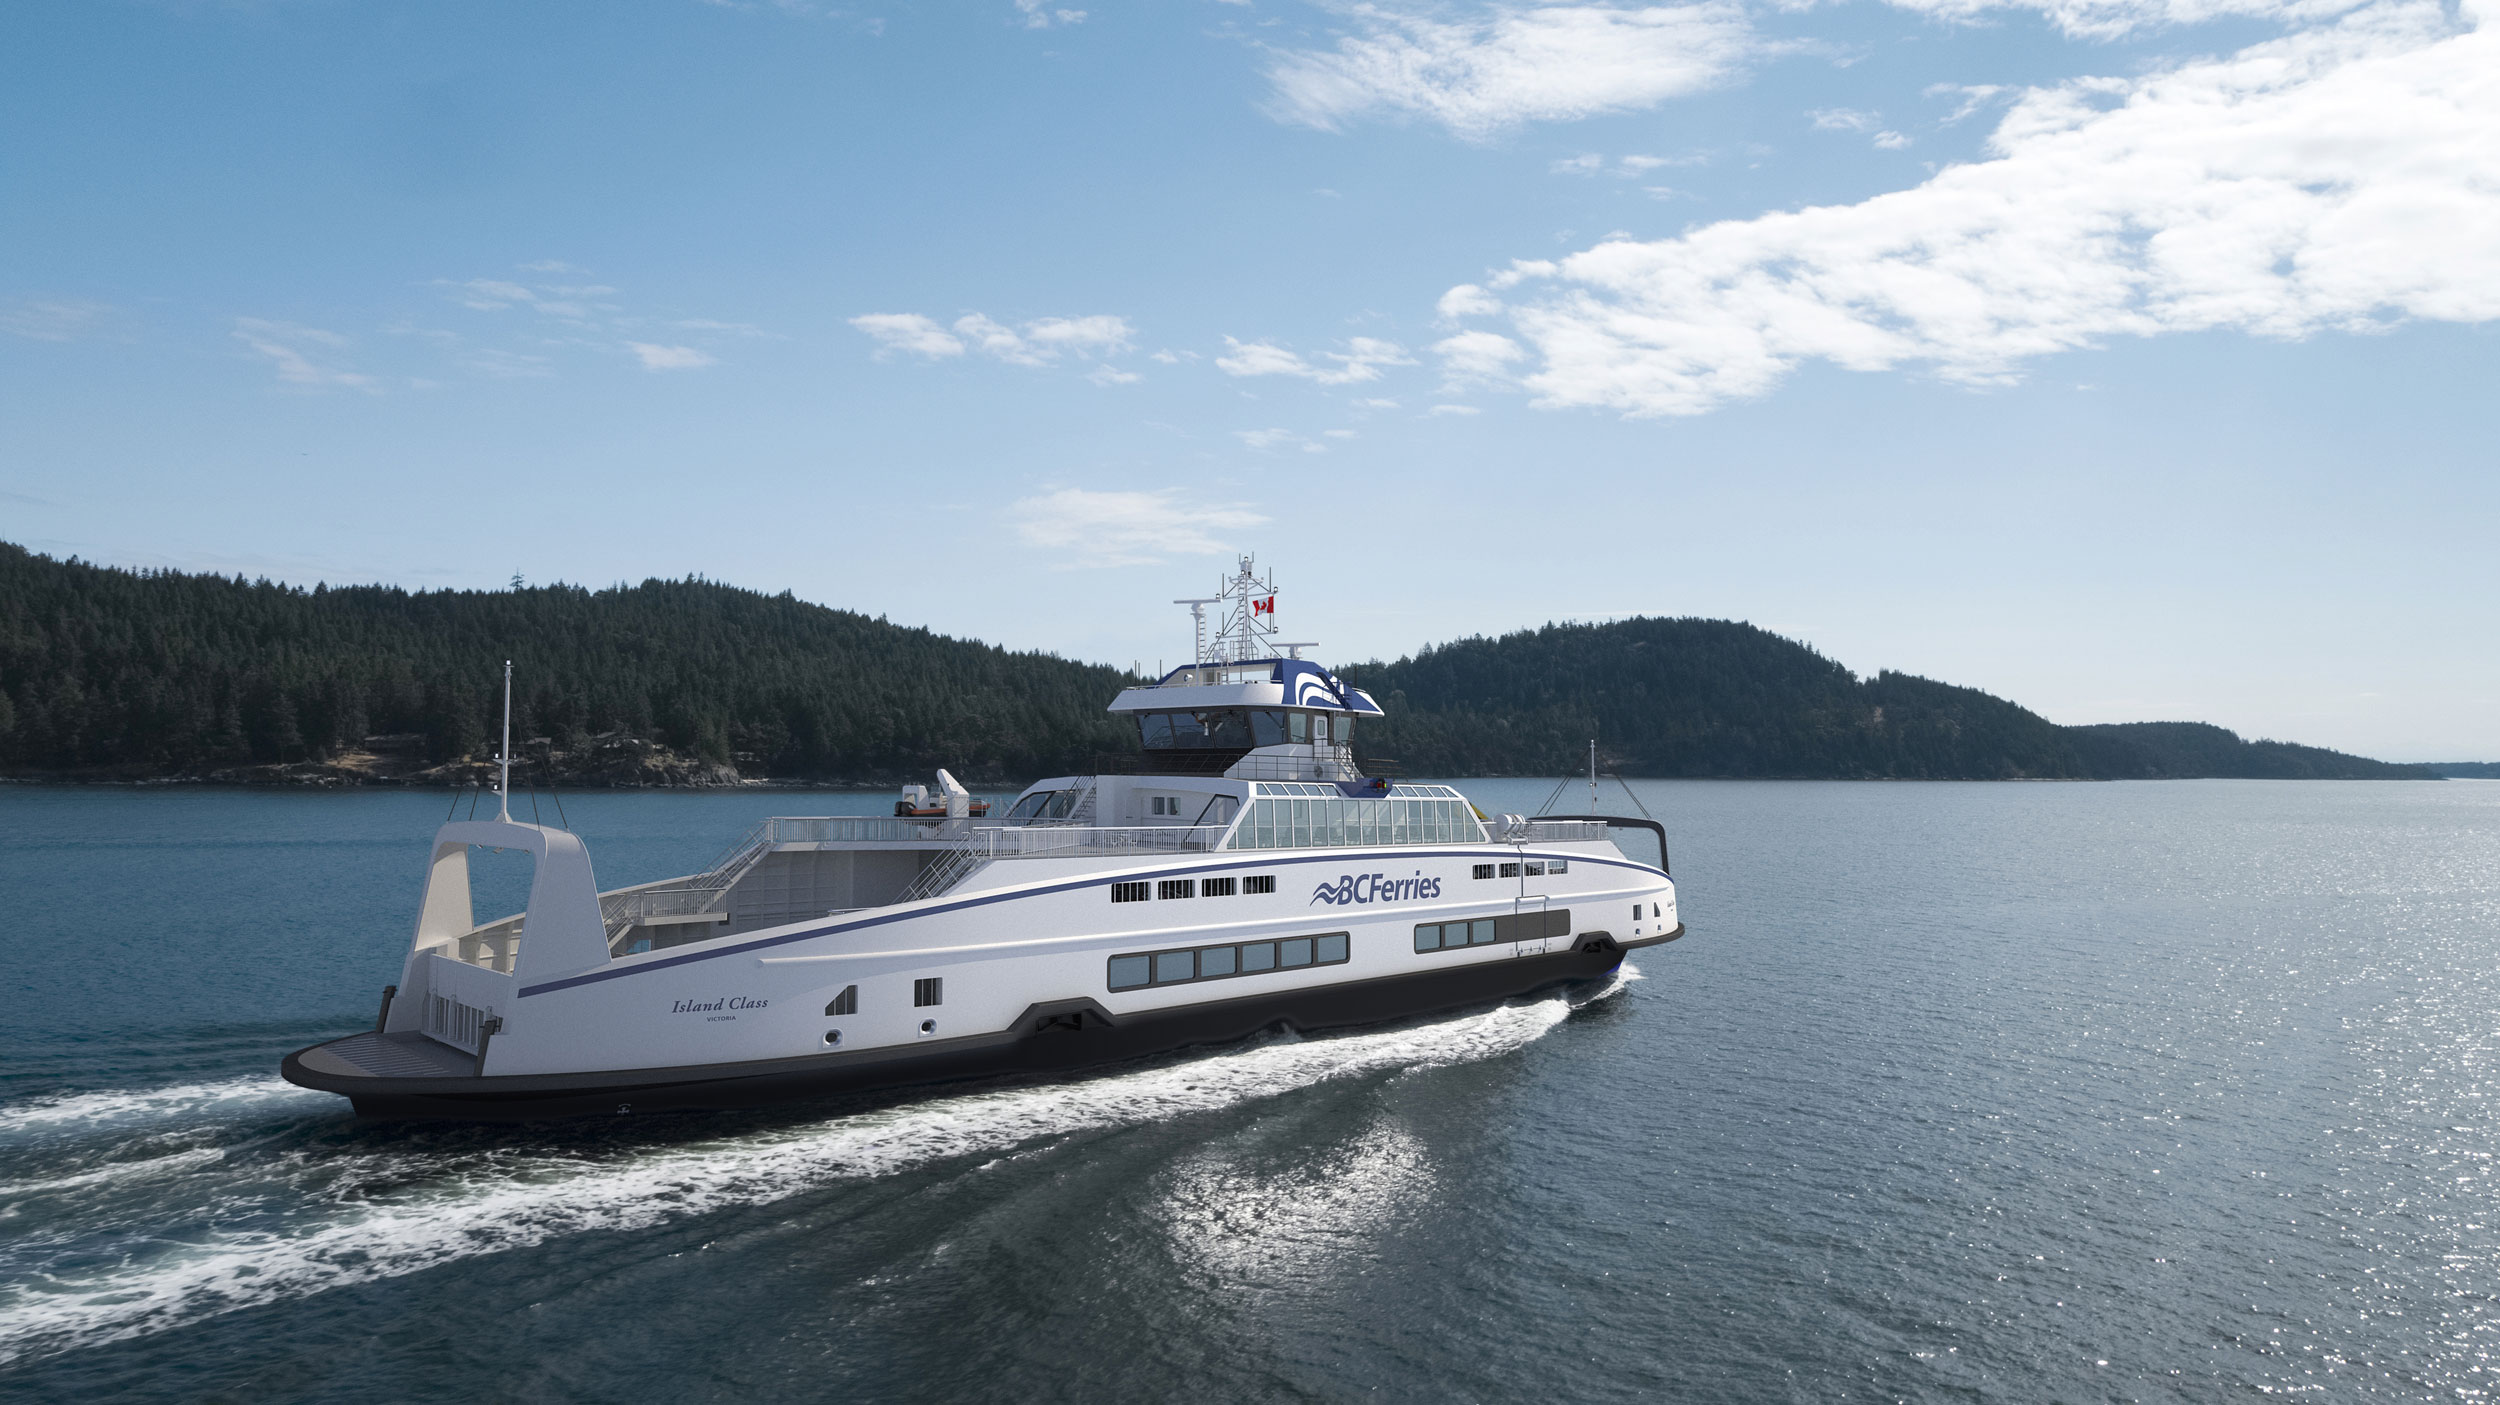 van-der-leun-hybride-bc-ferries-canada-damen-shipyards-1-web-1